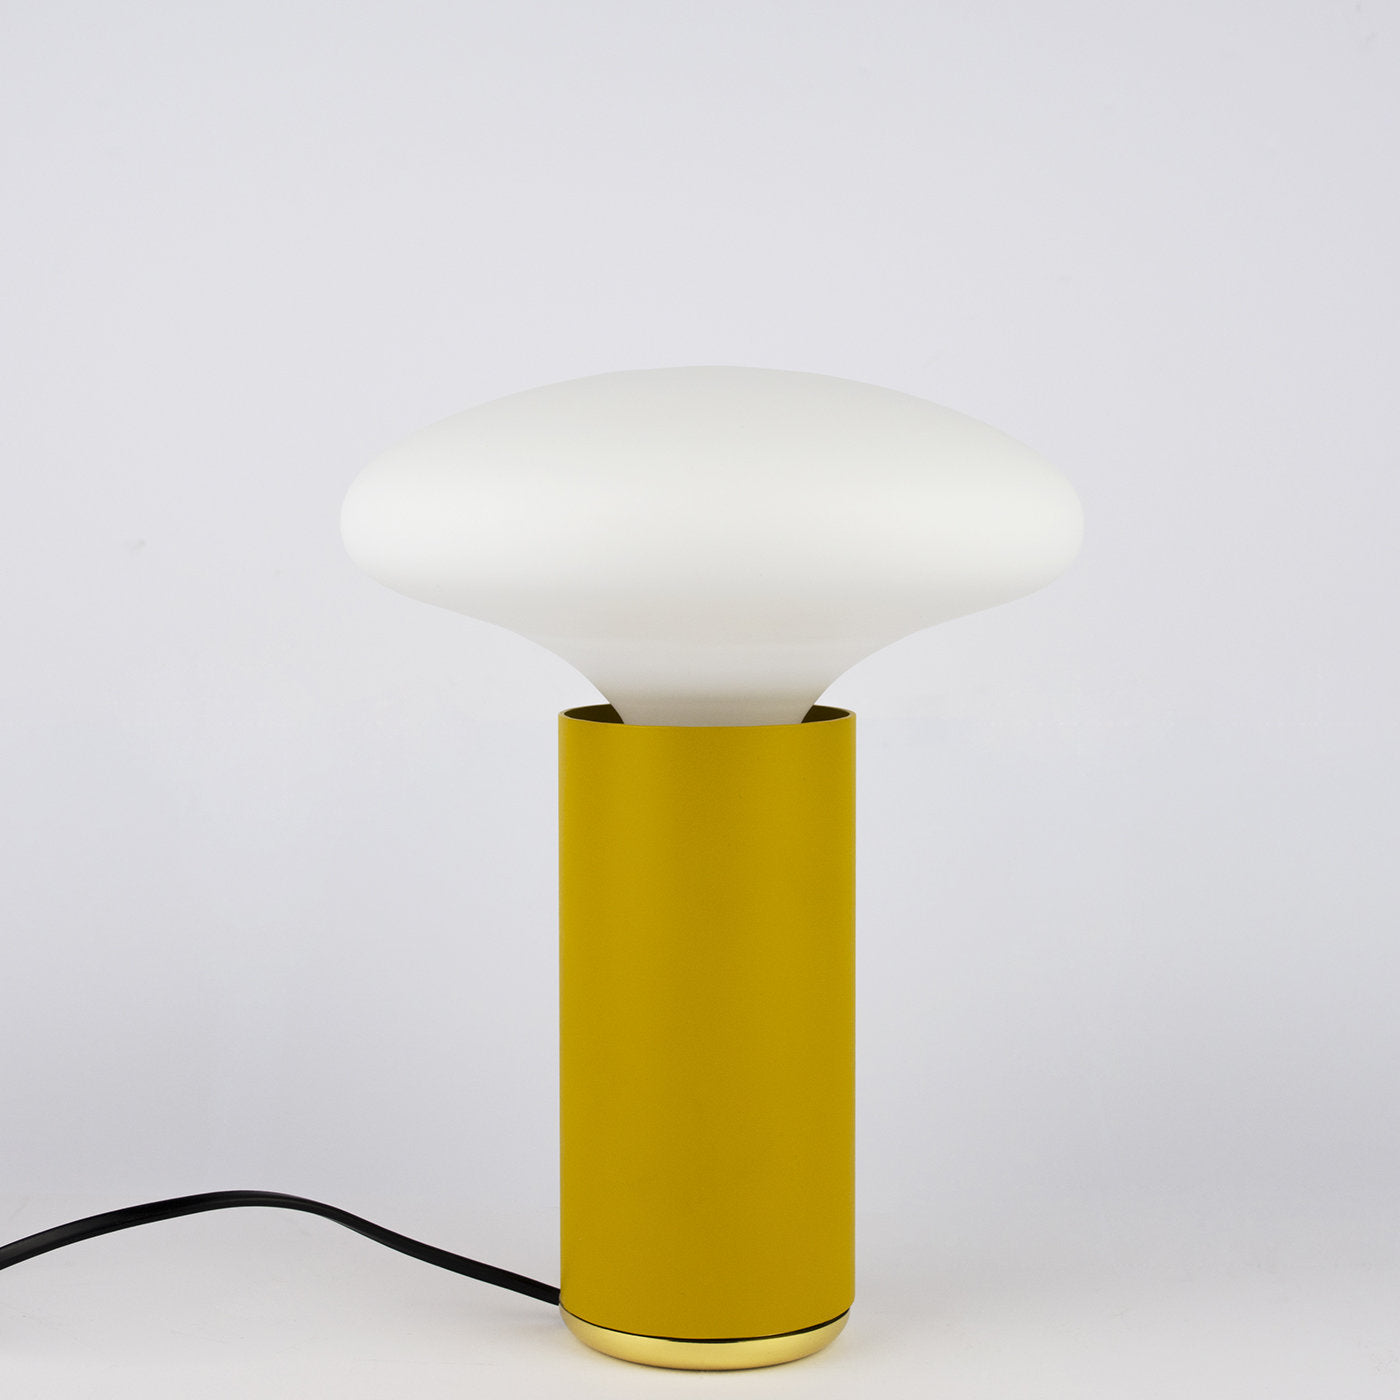 Stem Table Lamp by Alalda Design - Alternative view 2